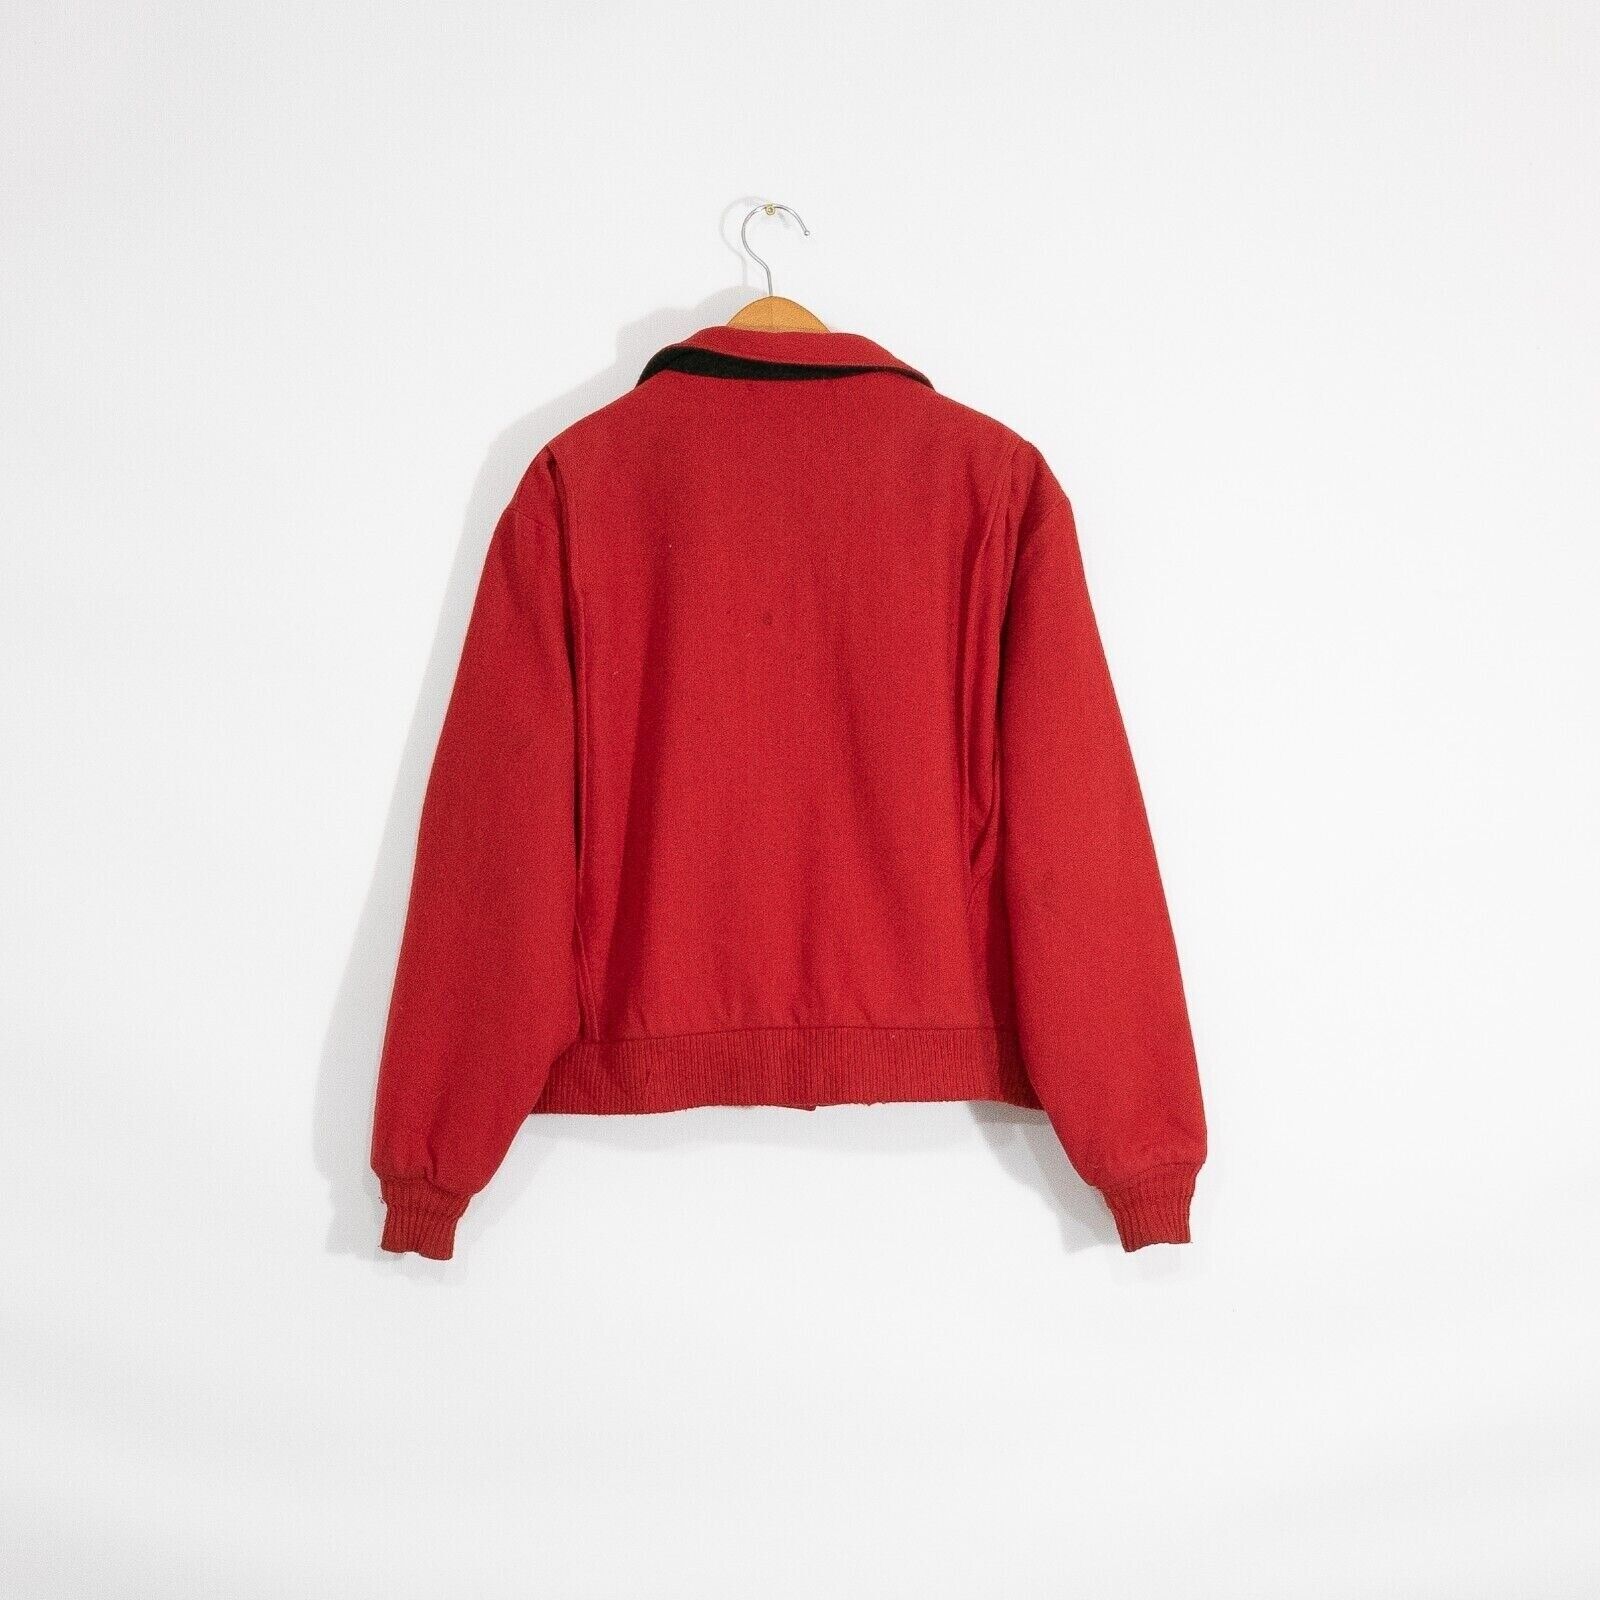 Vintage Vintage 80s Woolrich Bomber Jacket Mens XL Red Wool Flannel Size US XL / EU 56 / 4 - 6 Thumbnail